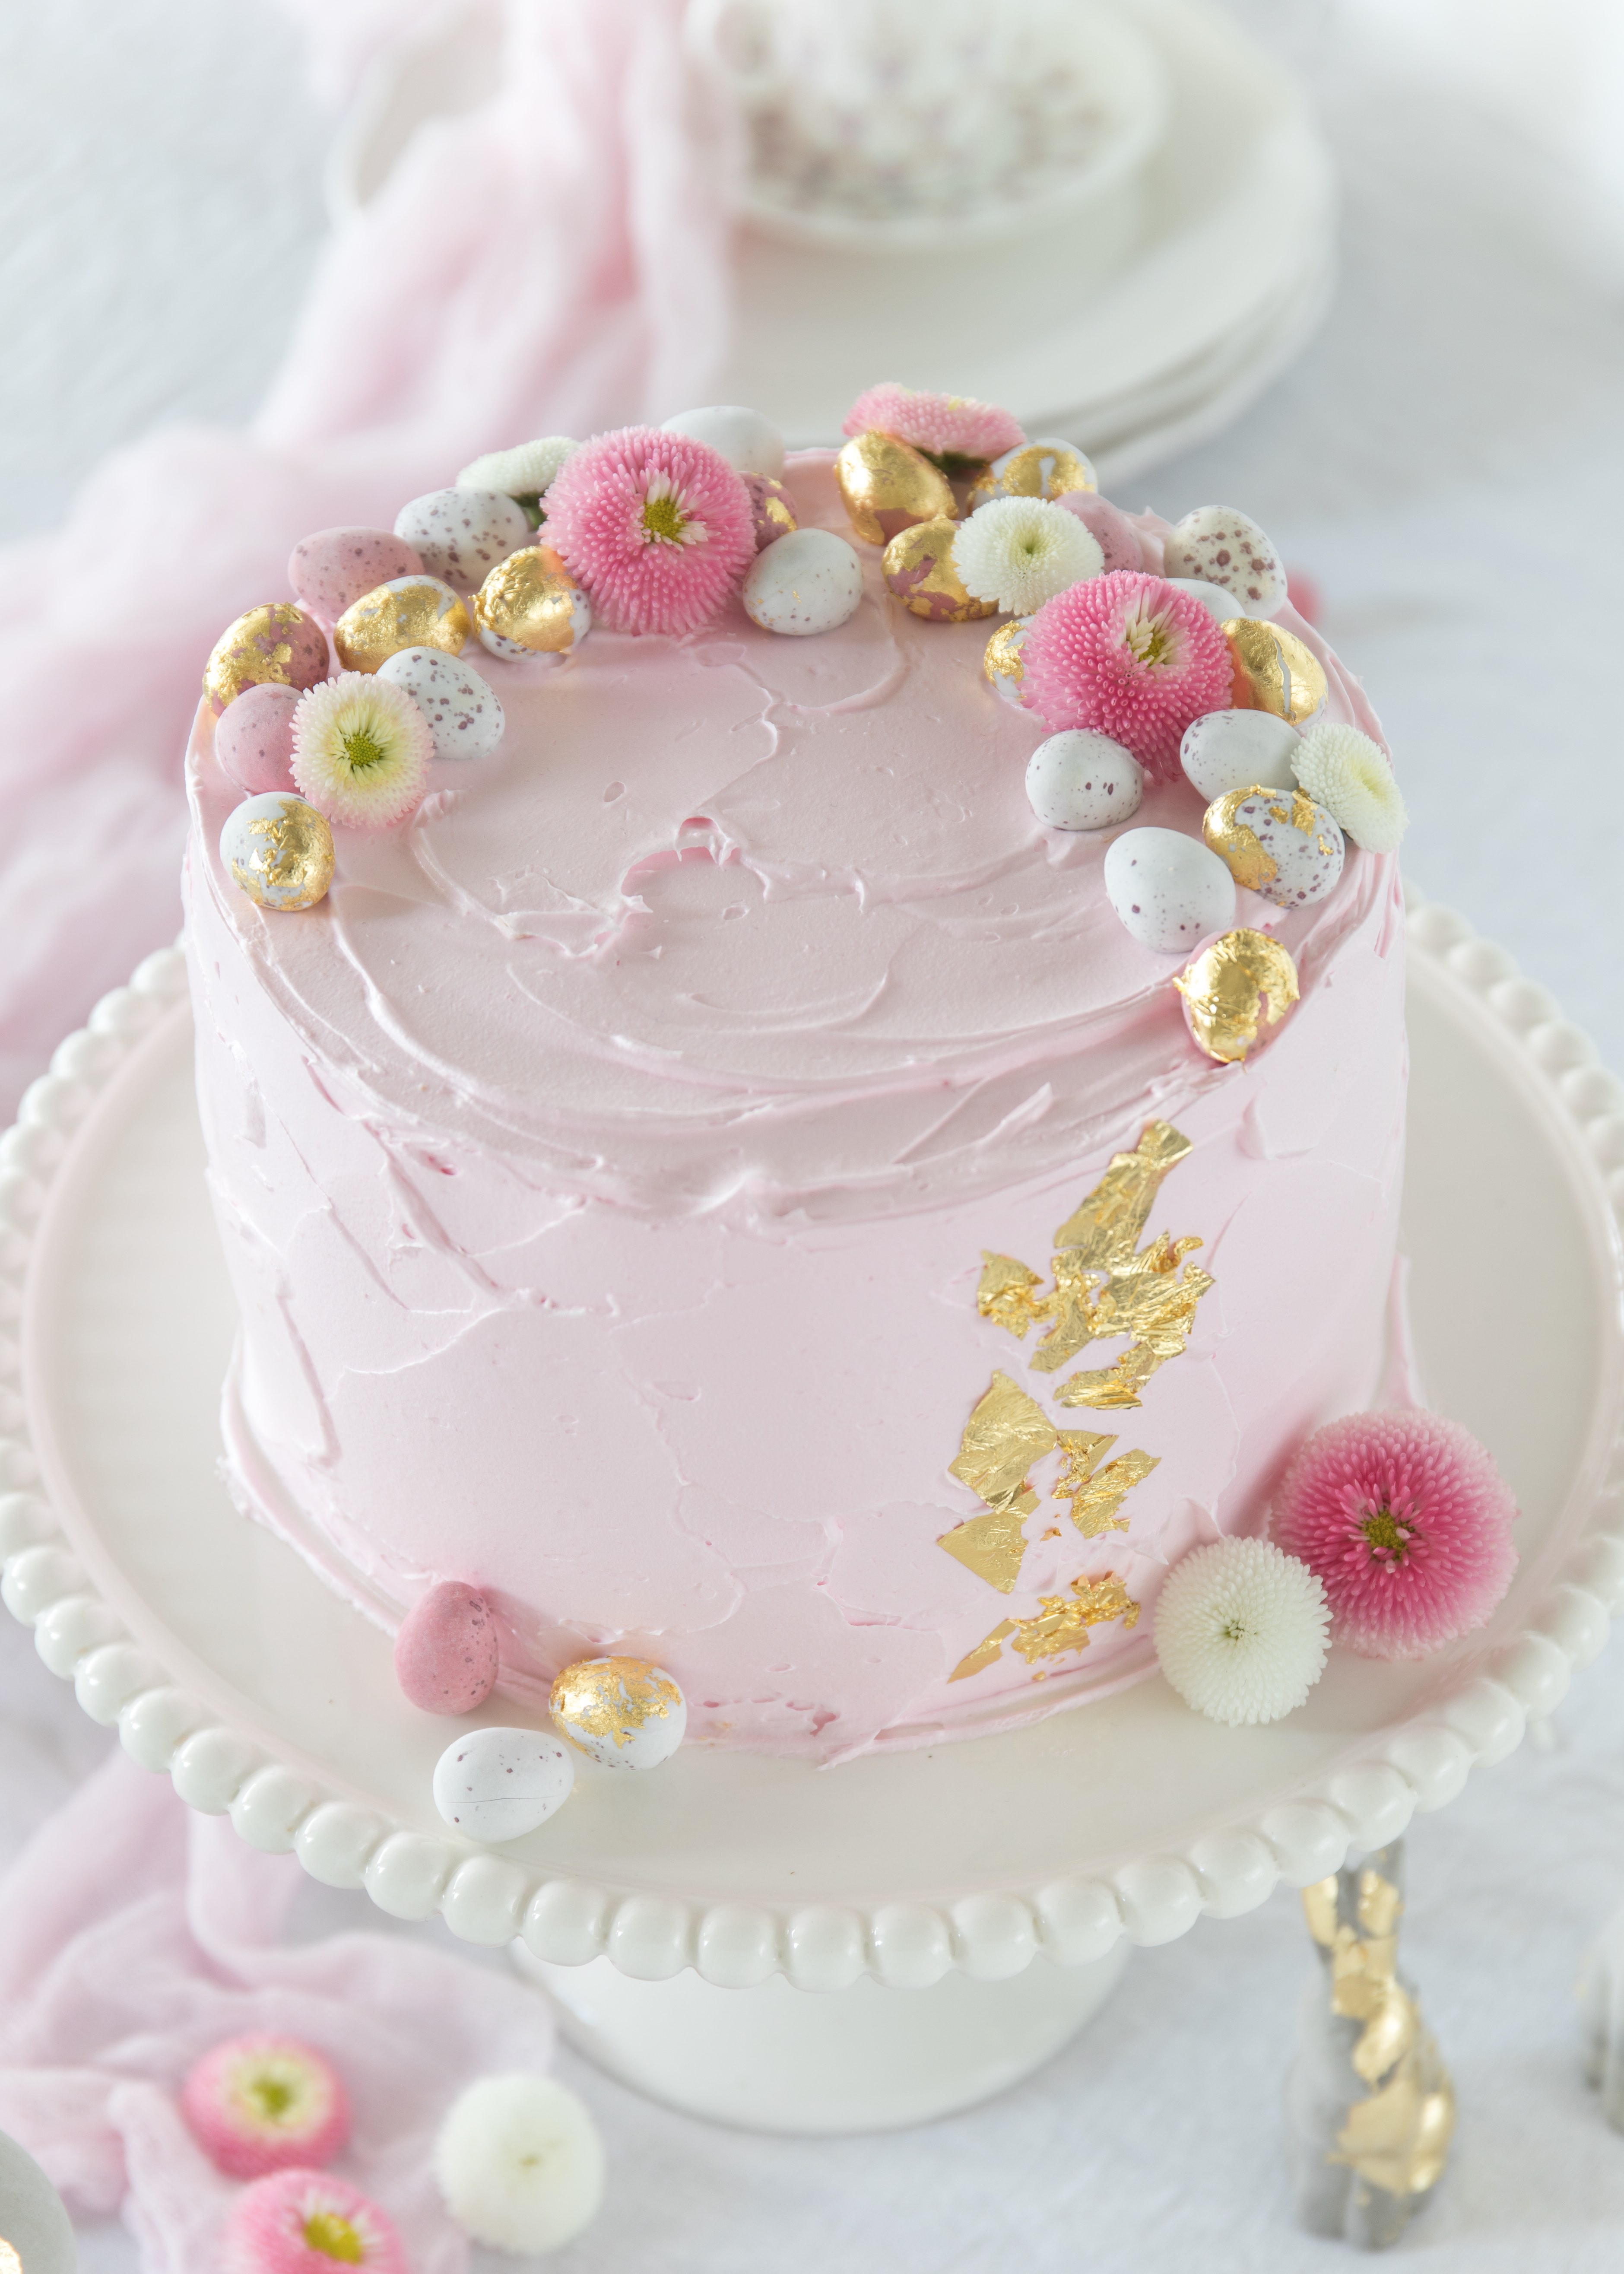 Oster Rezept: Himbeer Rhabarber Tiramisu Torte backen Ostertorte Ostern Cakestyling #ostern #torte #cake #backen #easter #cakestyling | Emma´s Lieblingsstücke